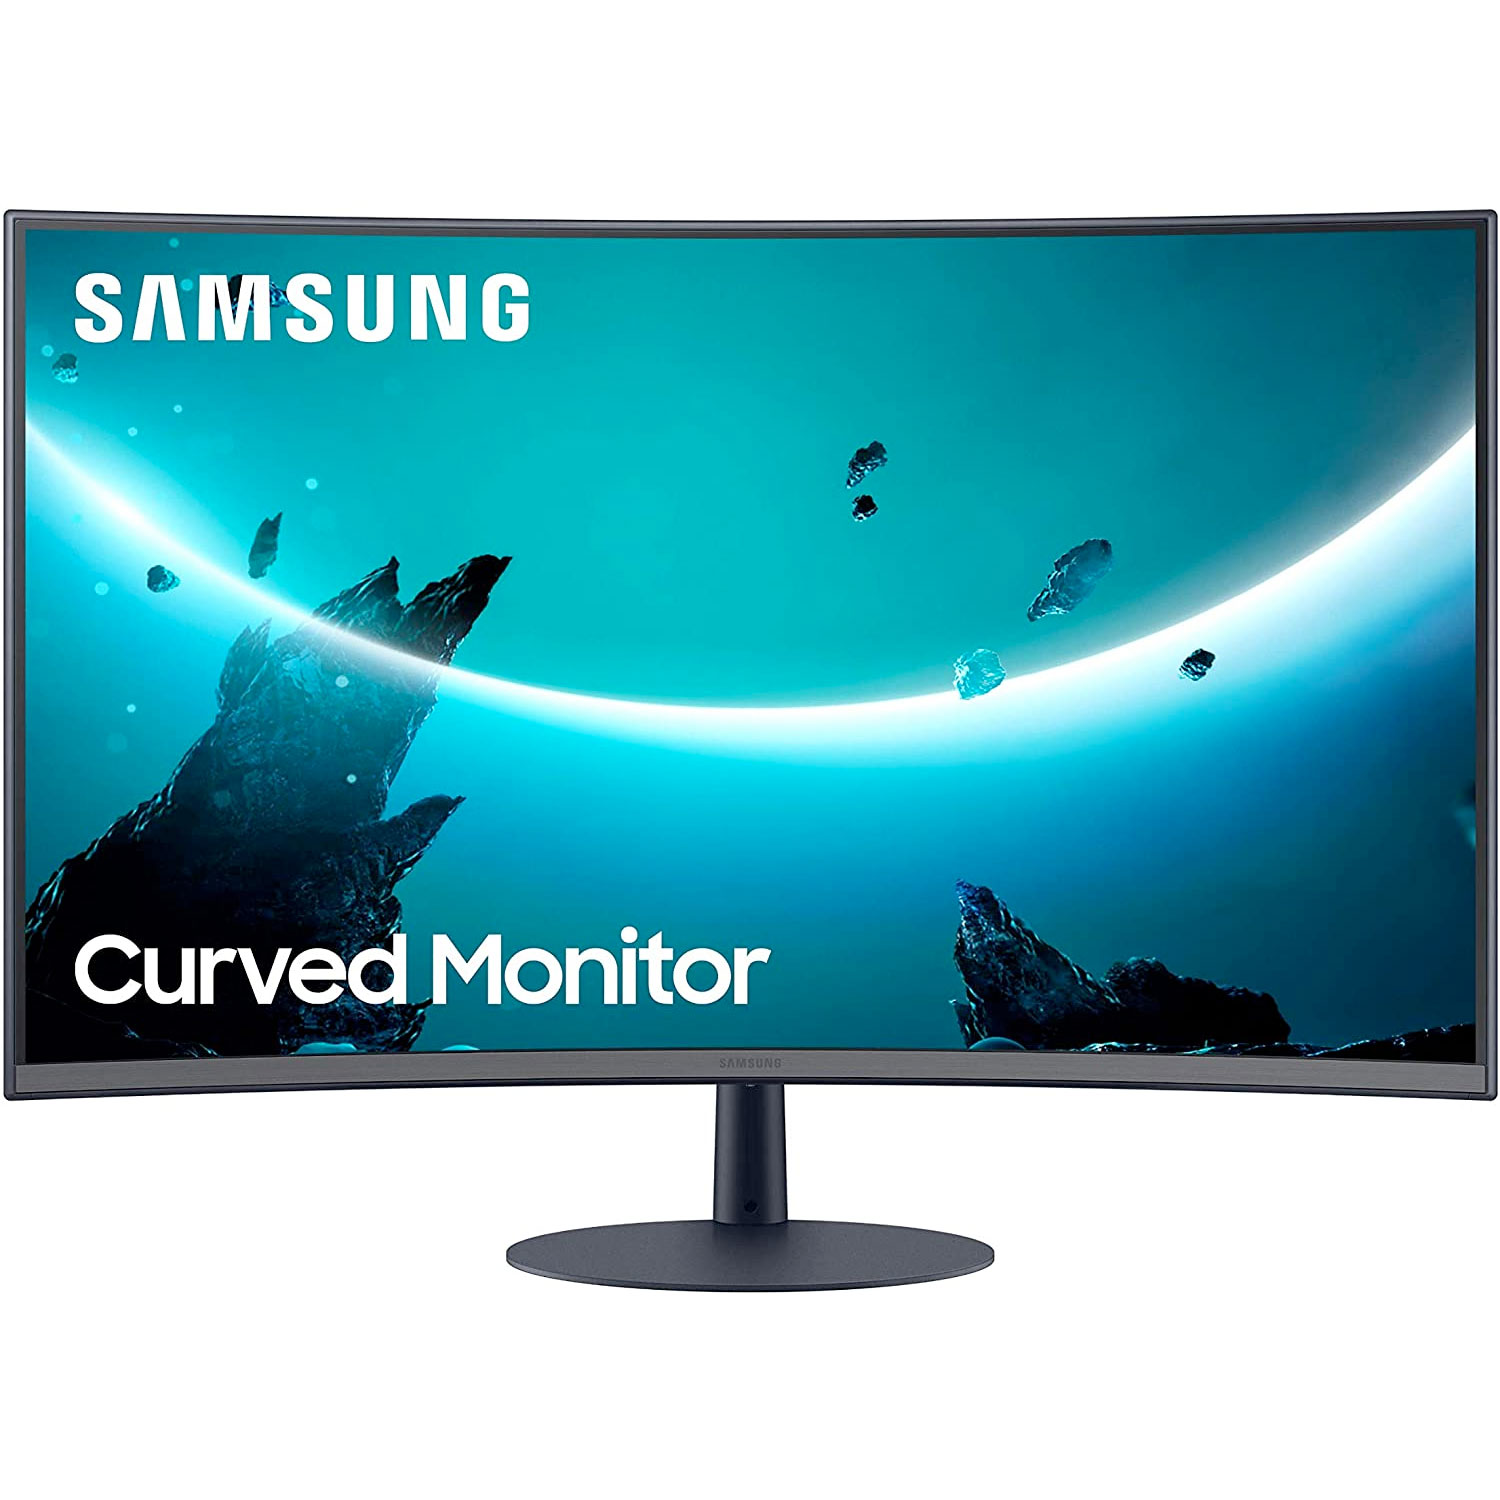 Amazon：Samsung LED 24吋全高清(Full HD)曲面電腦顯示屏 (curved monitor)只賣$198